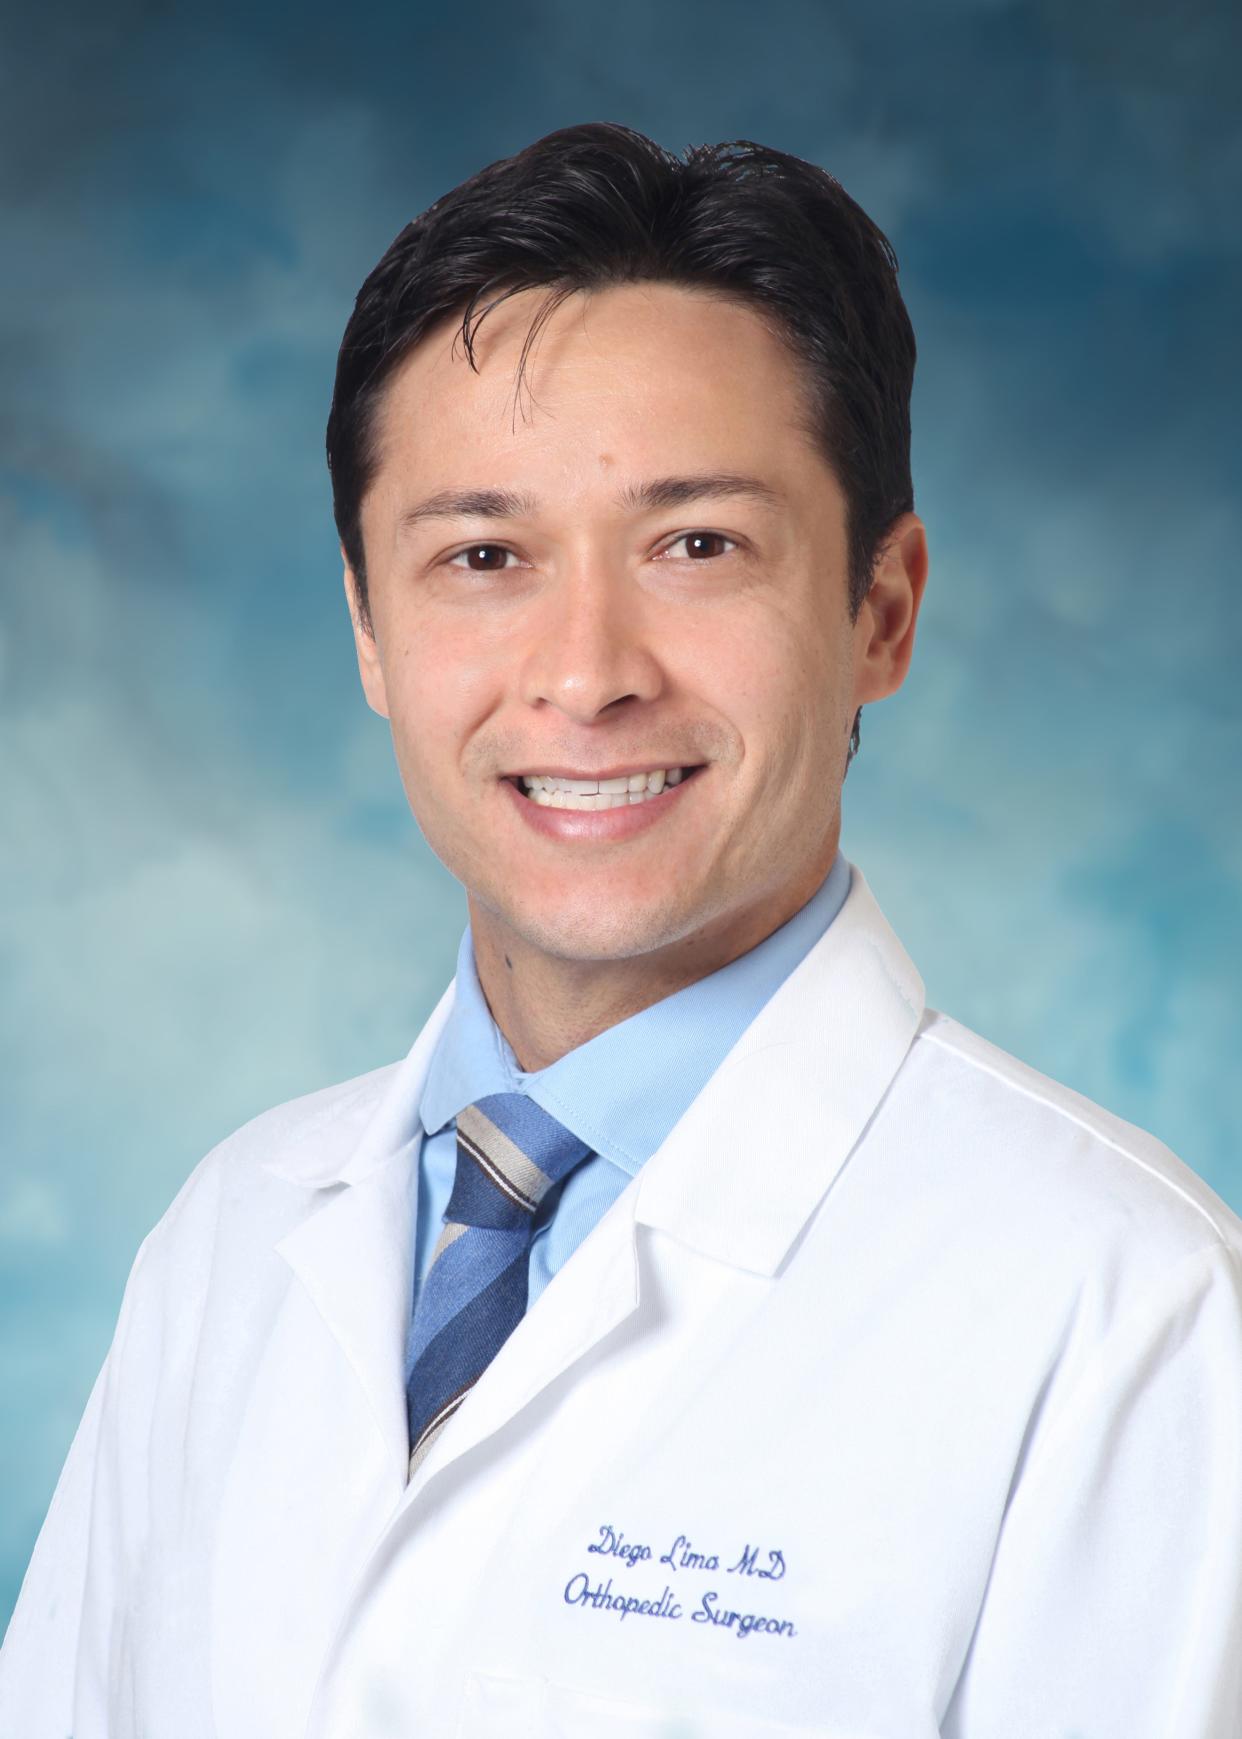 Dr. Diego Lima